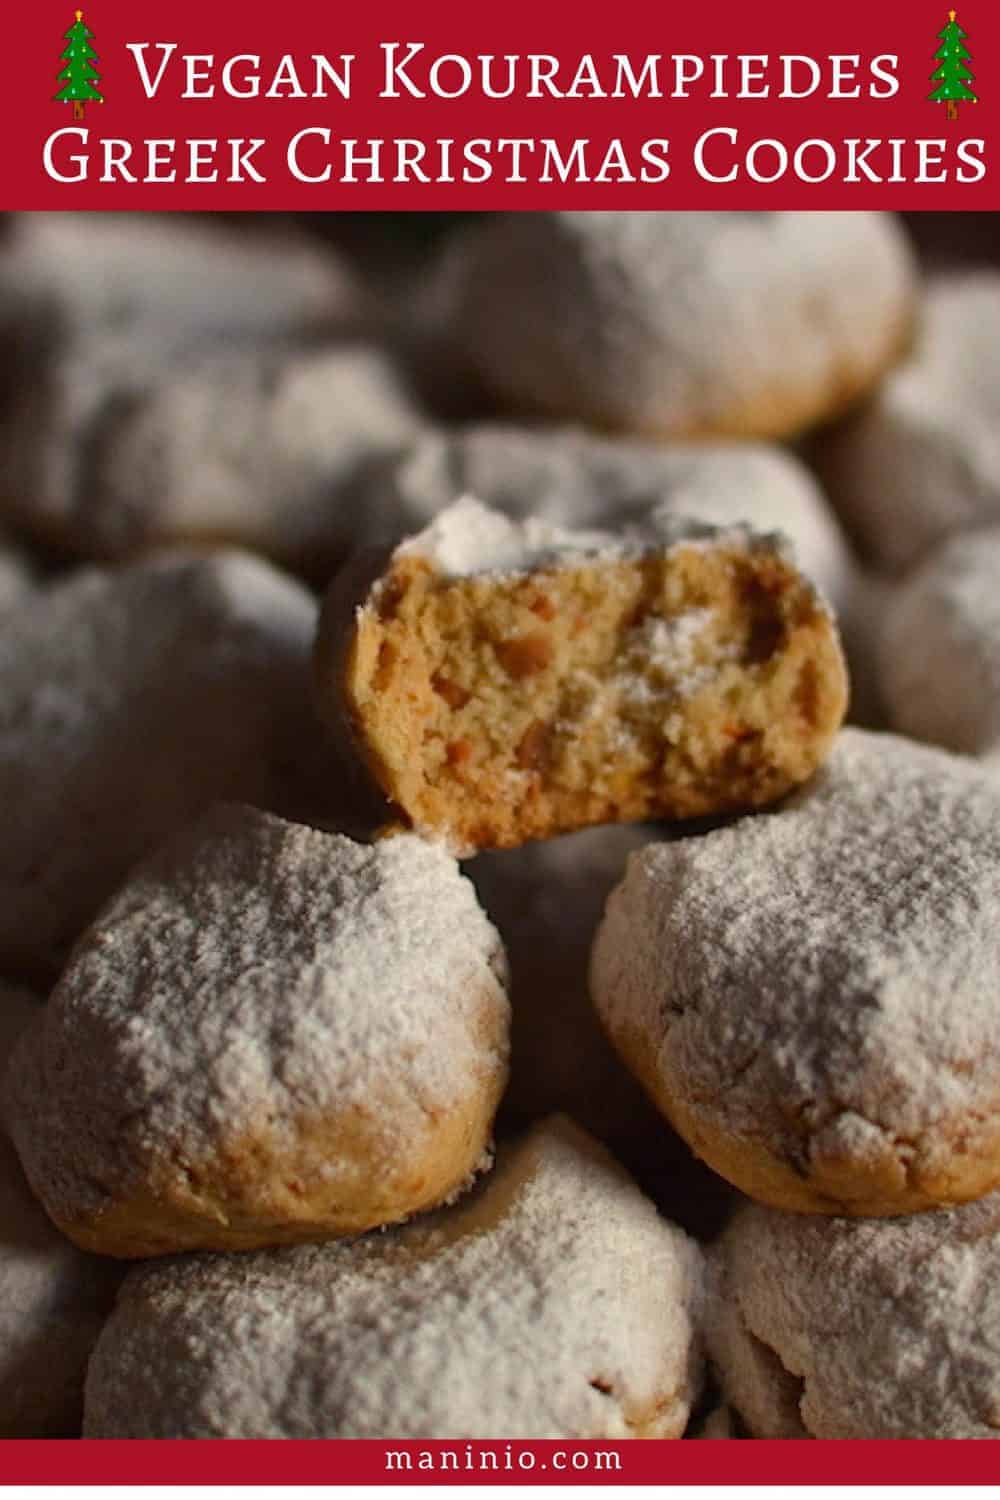 Vegan Κουραμπιέδες ψημένοι με Ζάχαρη Καρύδας | Με λίγες Θερμίδες. maninio.com #christmascookies #vegankourampiedes